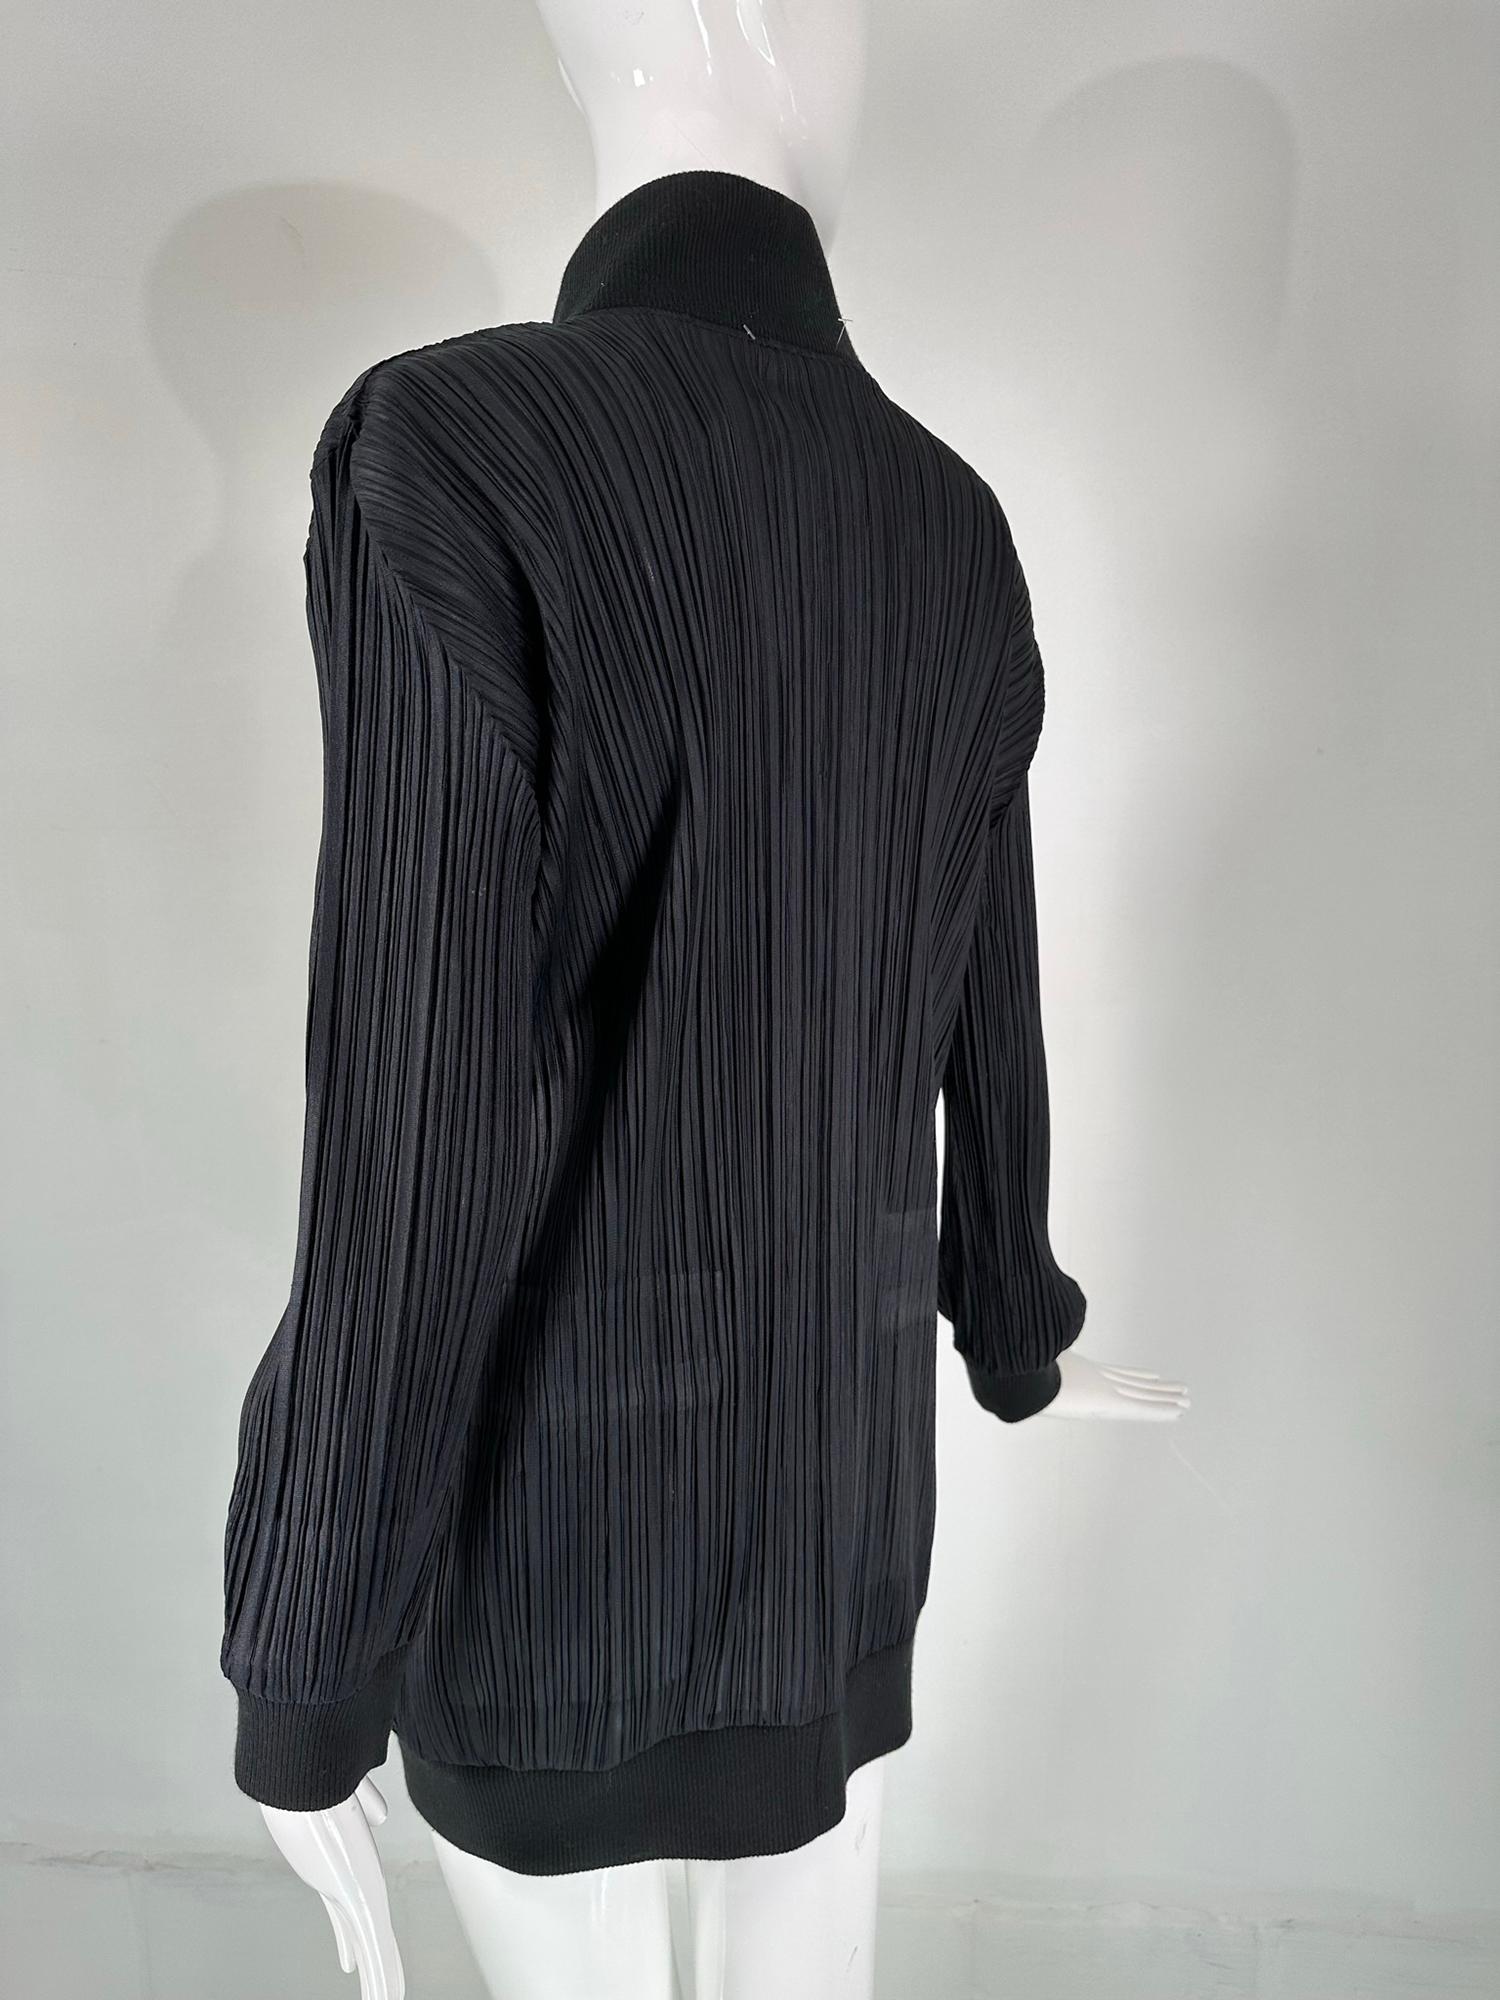 Issey Miyake Pleats Please Black Funnel Neck Hidden Zipper Front Long Jacket 3 For Sale 3